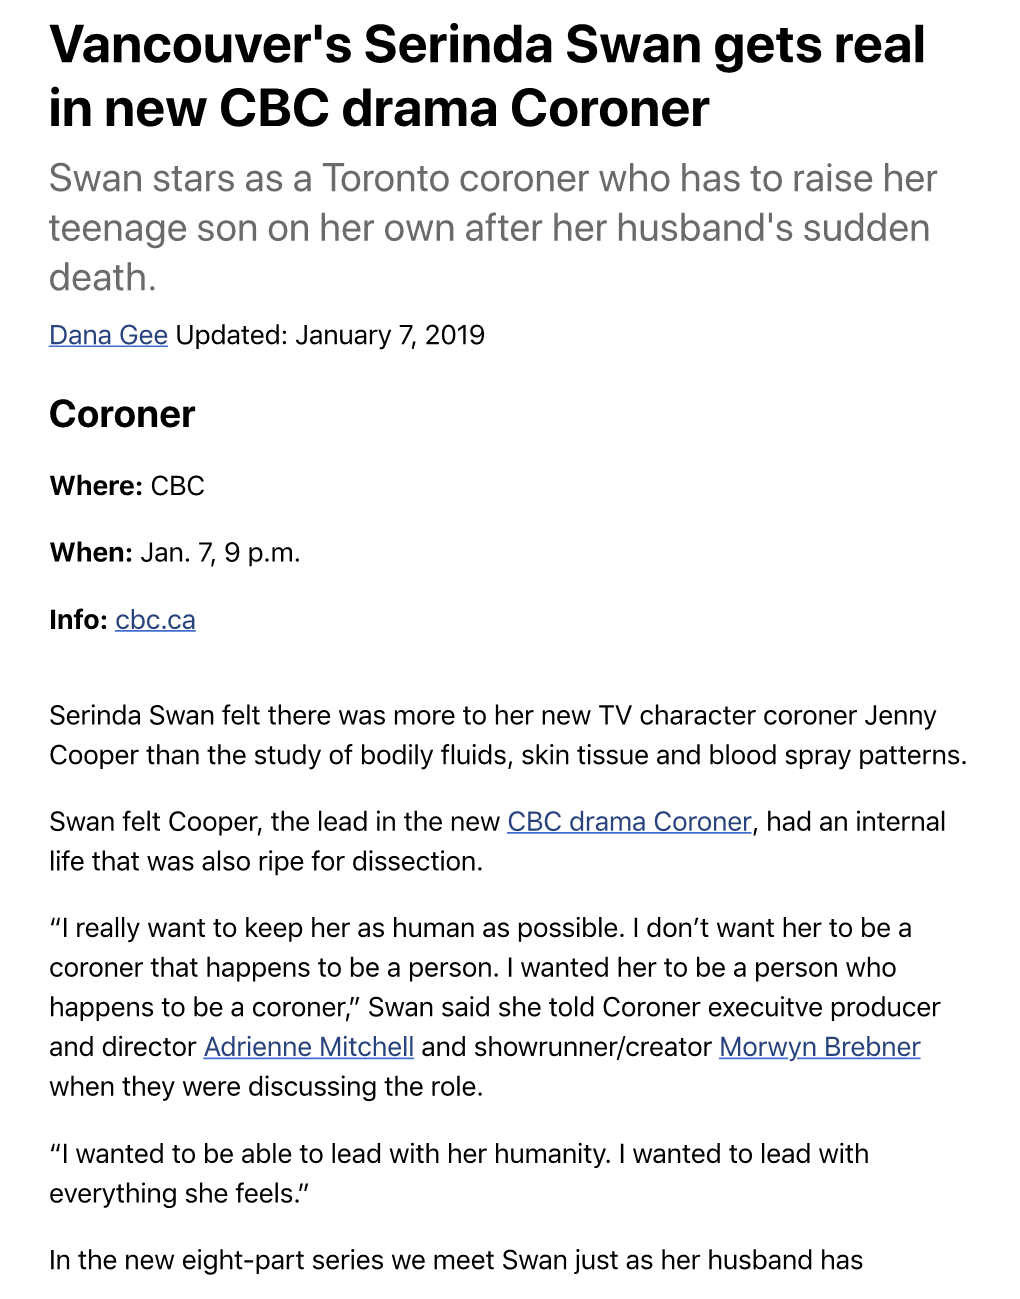 Vancouver's Serinda Swan Gets Real in New CBC Drama Coroner